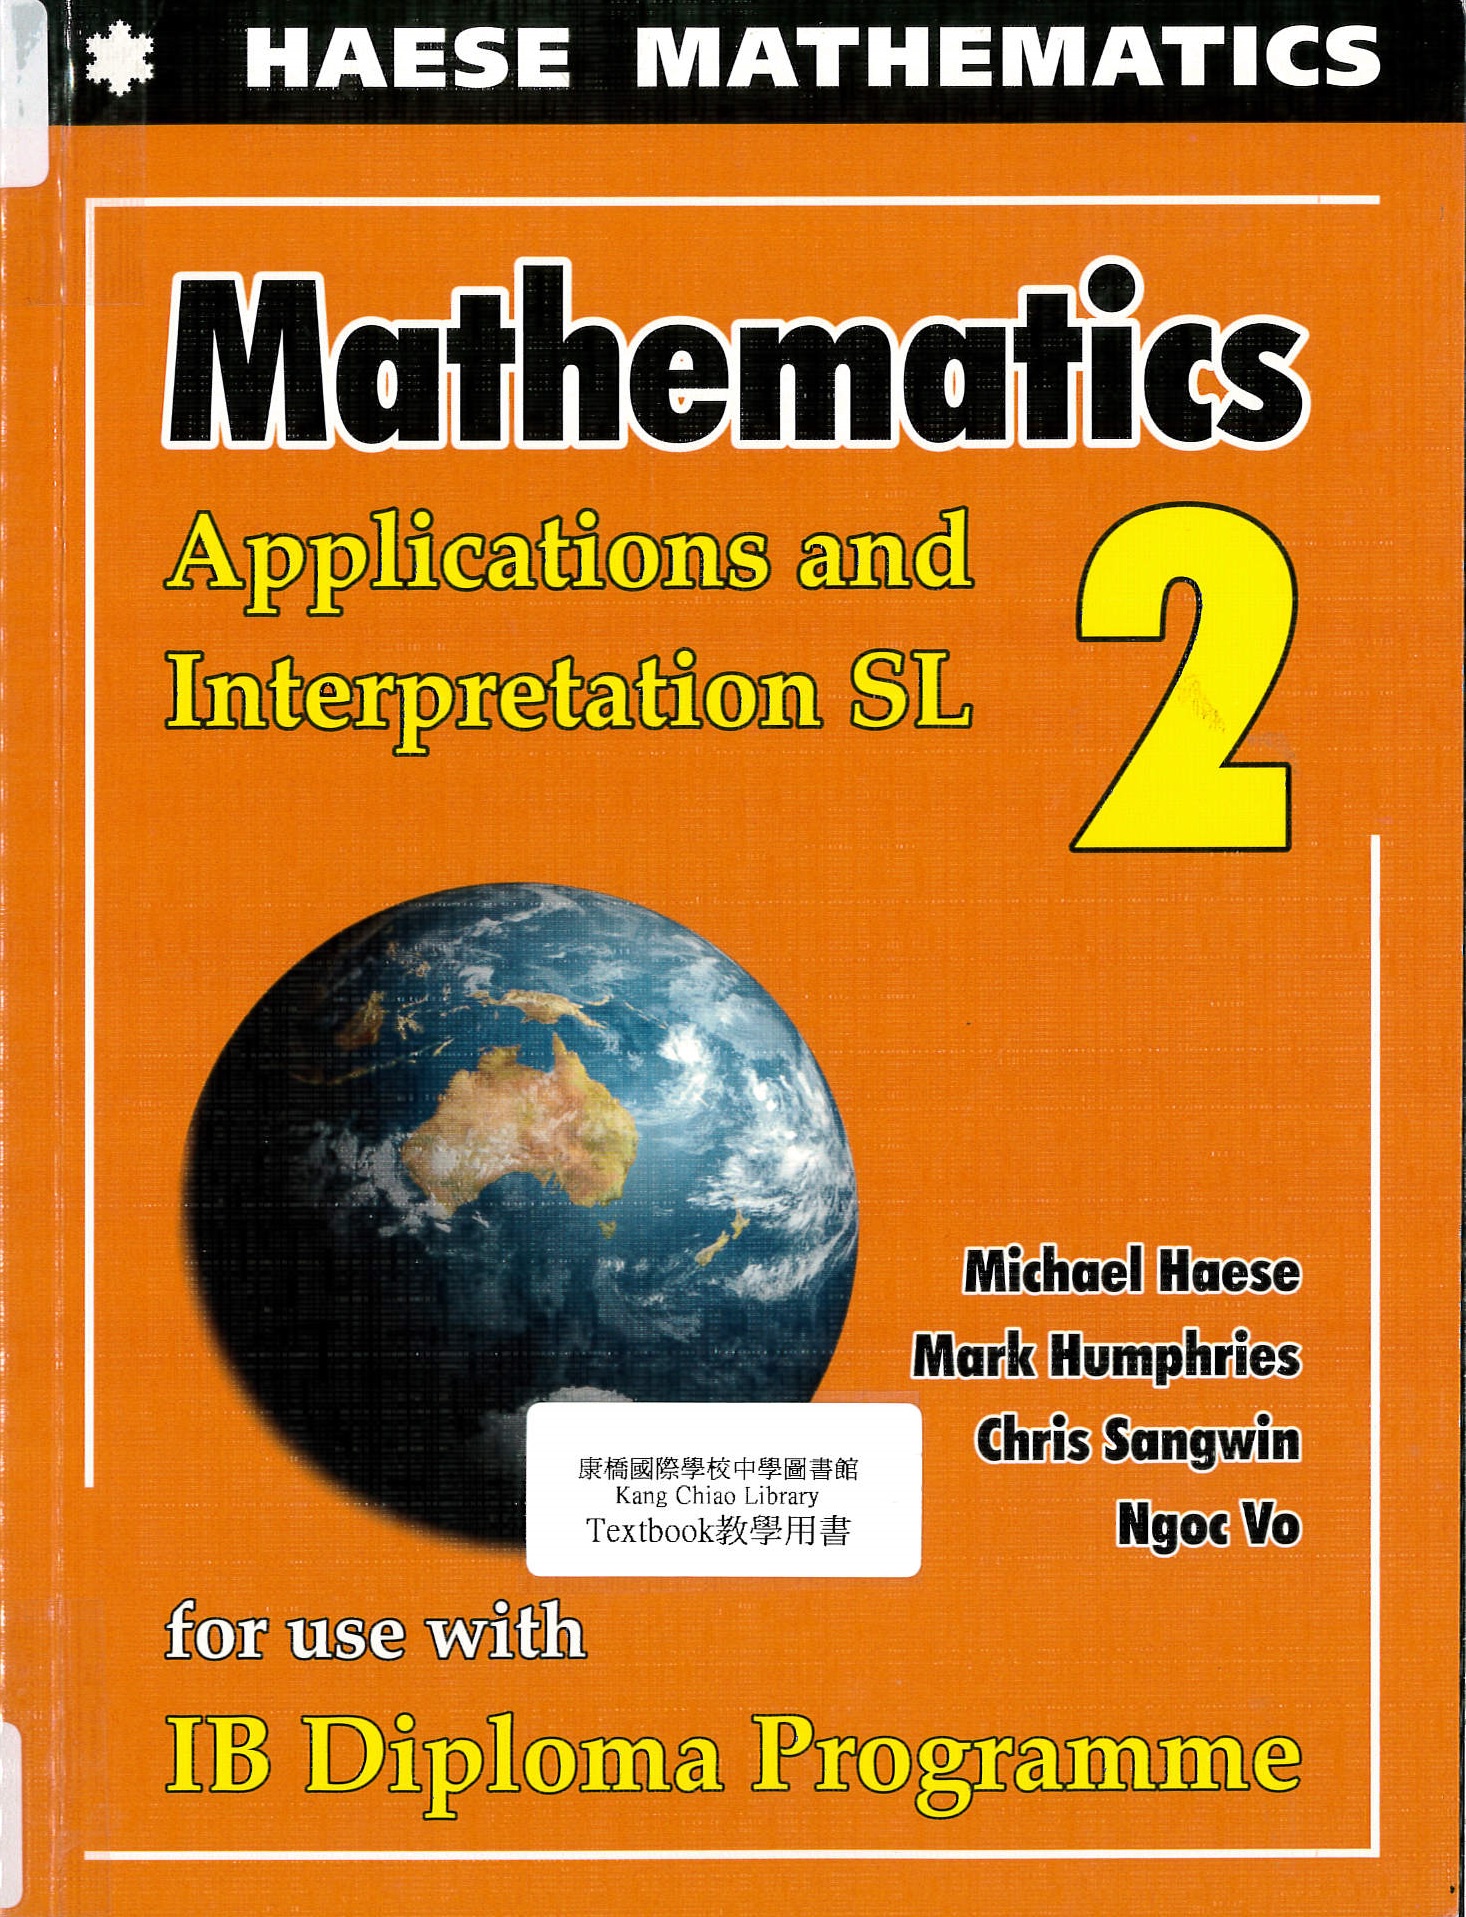 Mathematics applications and interpretation SL 2 : for use with IB Diploma Programme